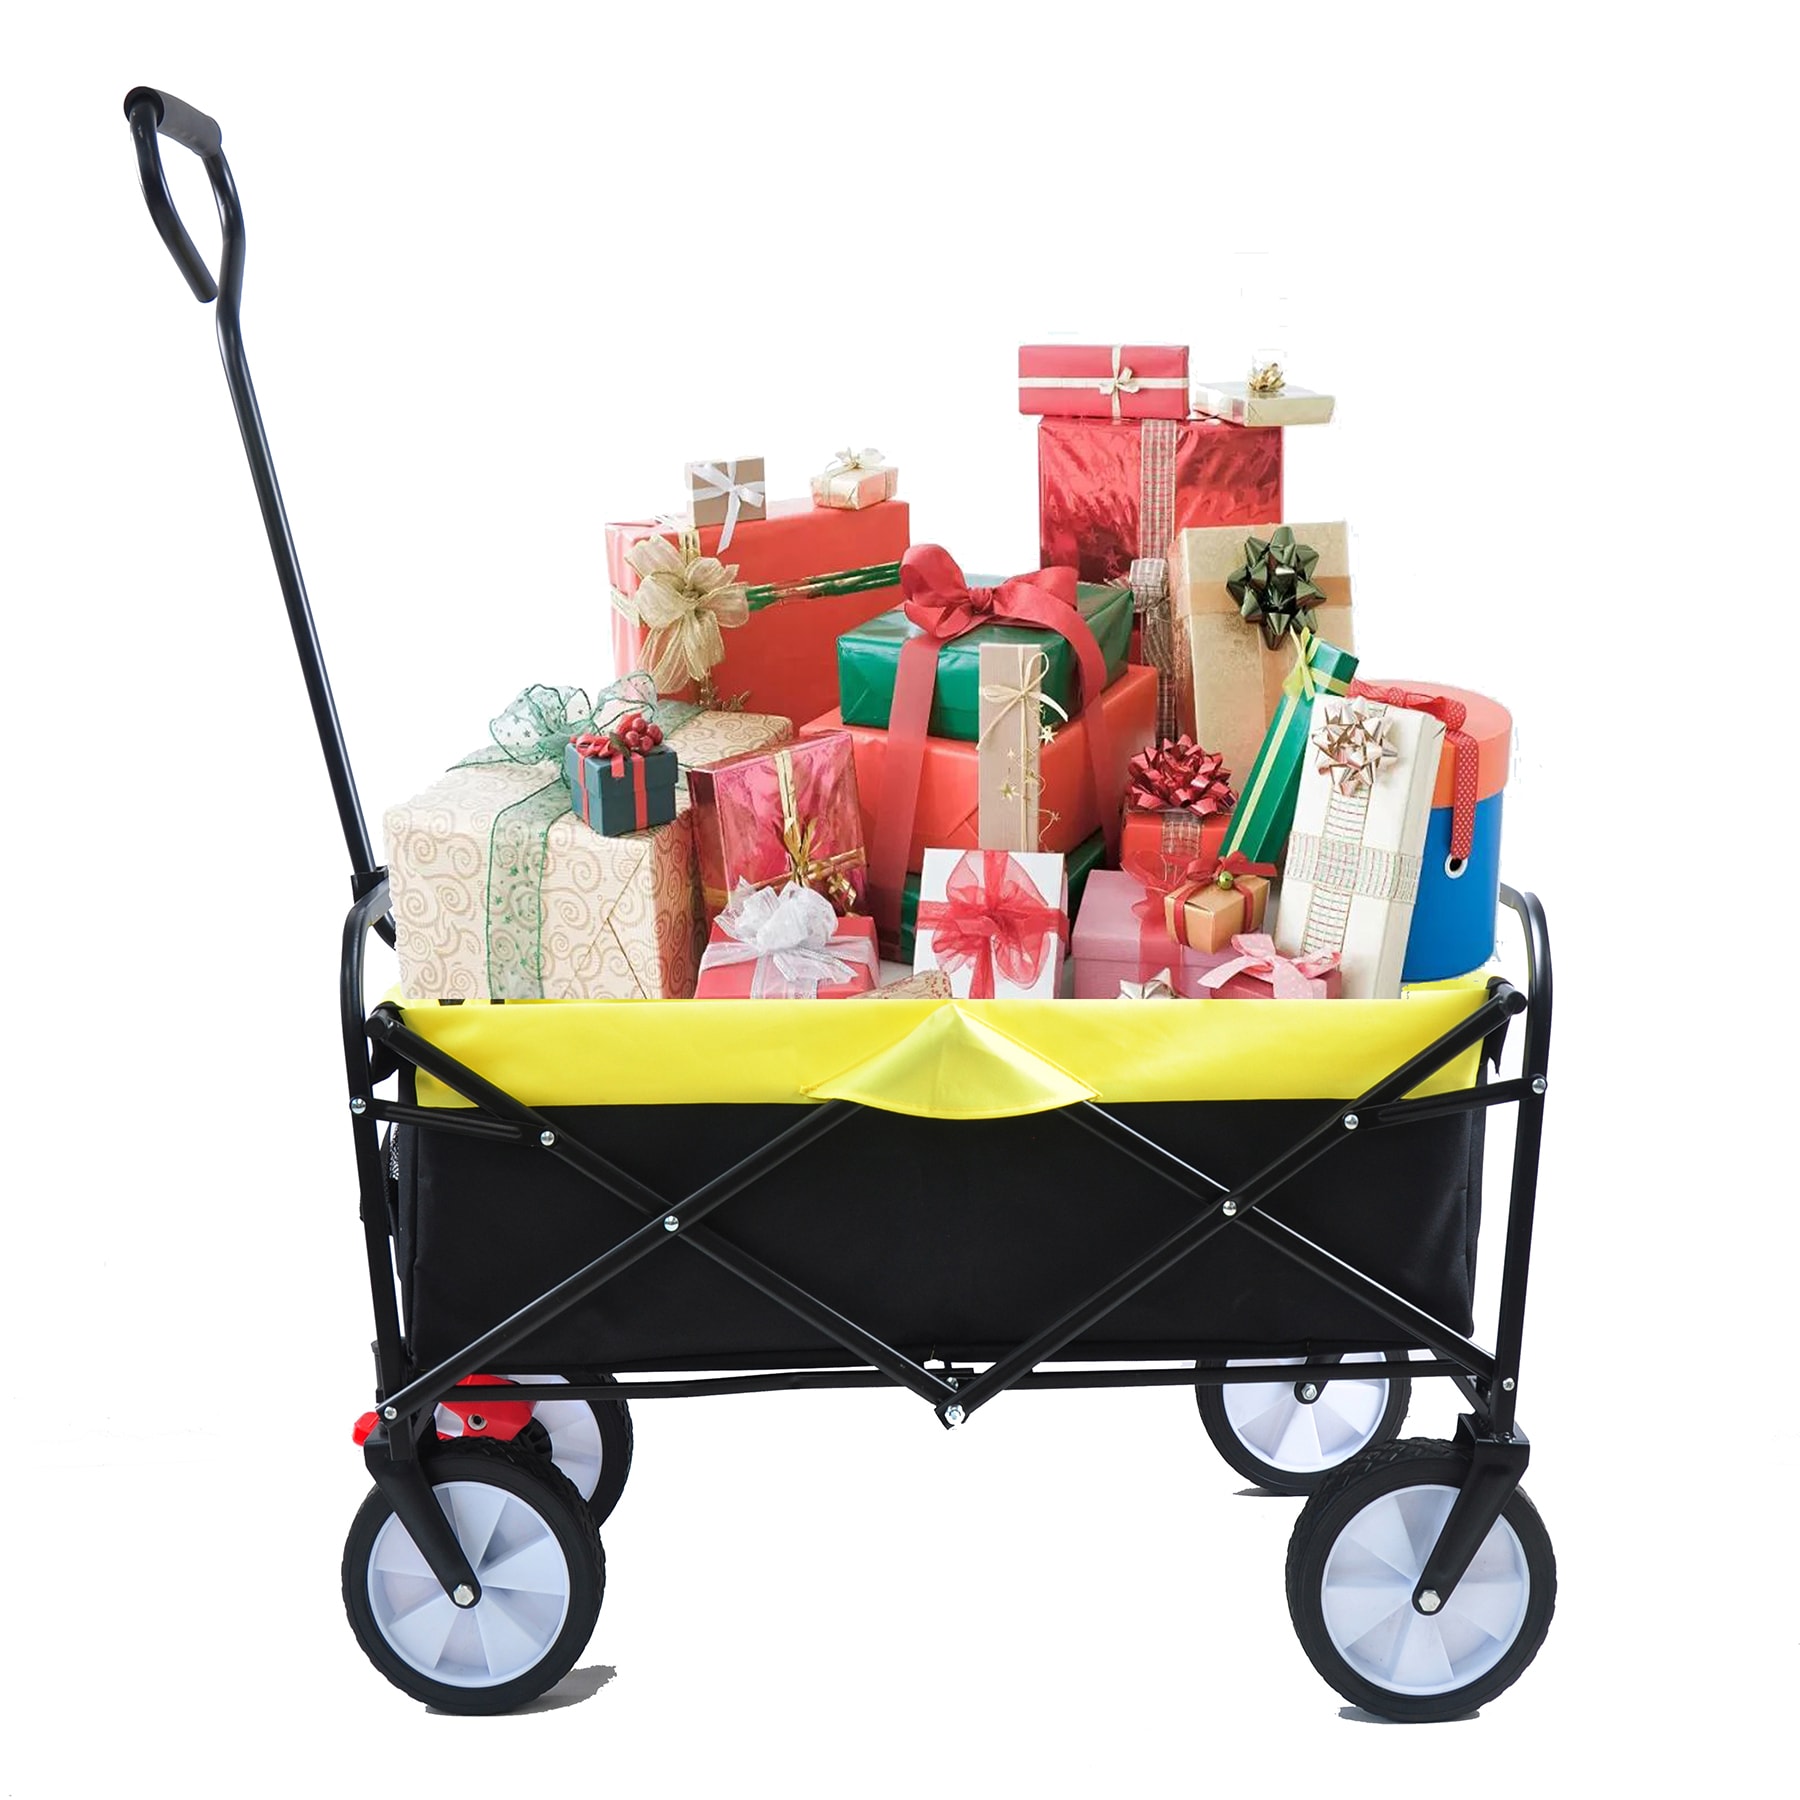 WELLFOR Patio Yard Cart Folding Wagon Garden Shopping Beach Cart 